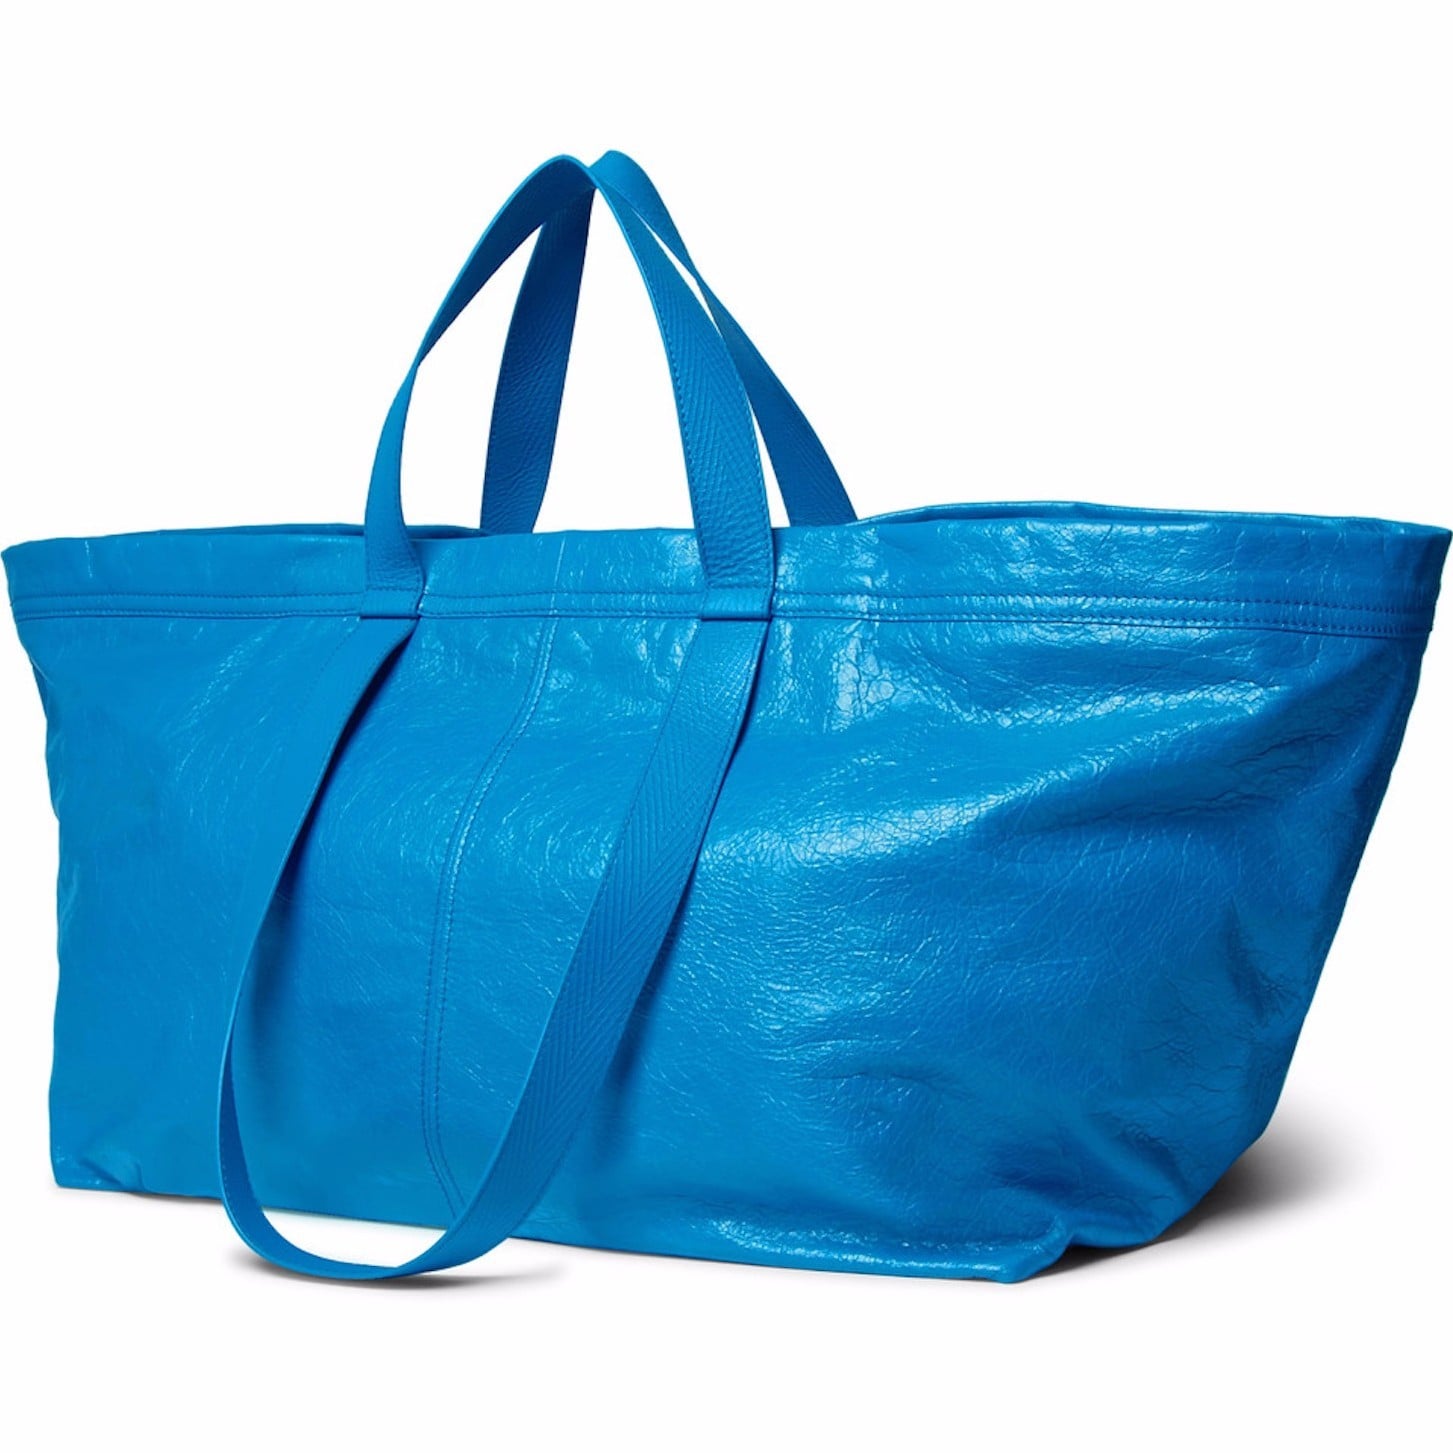 Balenciaga sells 1705 version of IKEAs blue tote bag worth 40p